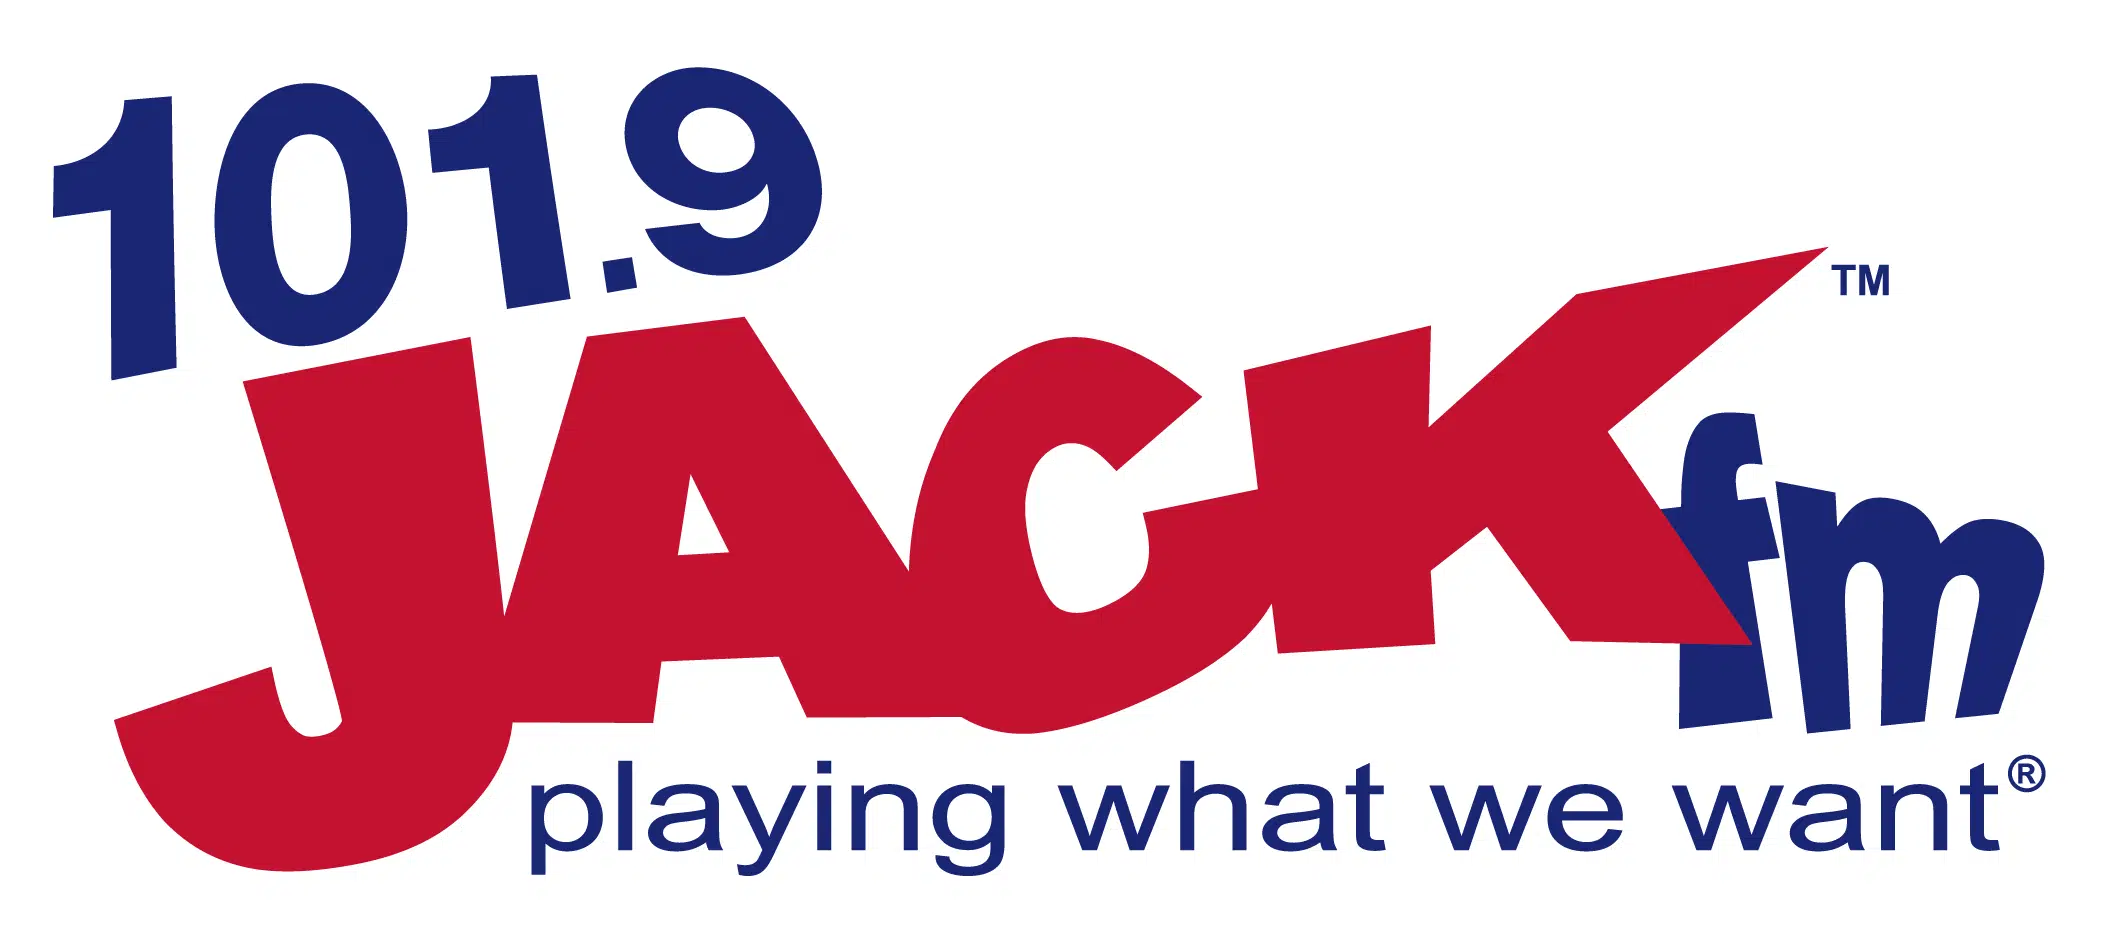 101.9 Jack FM